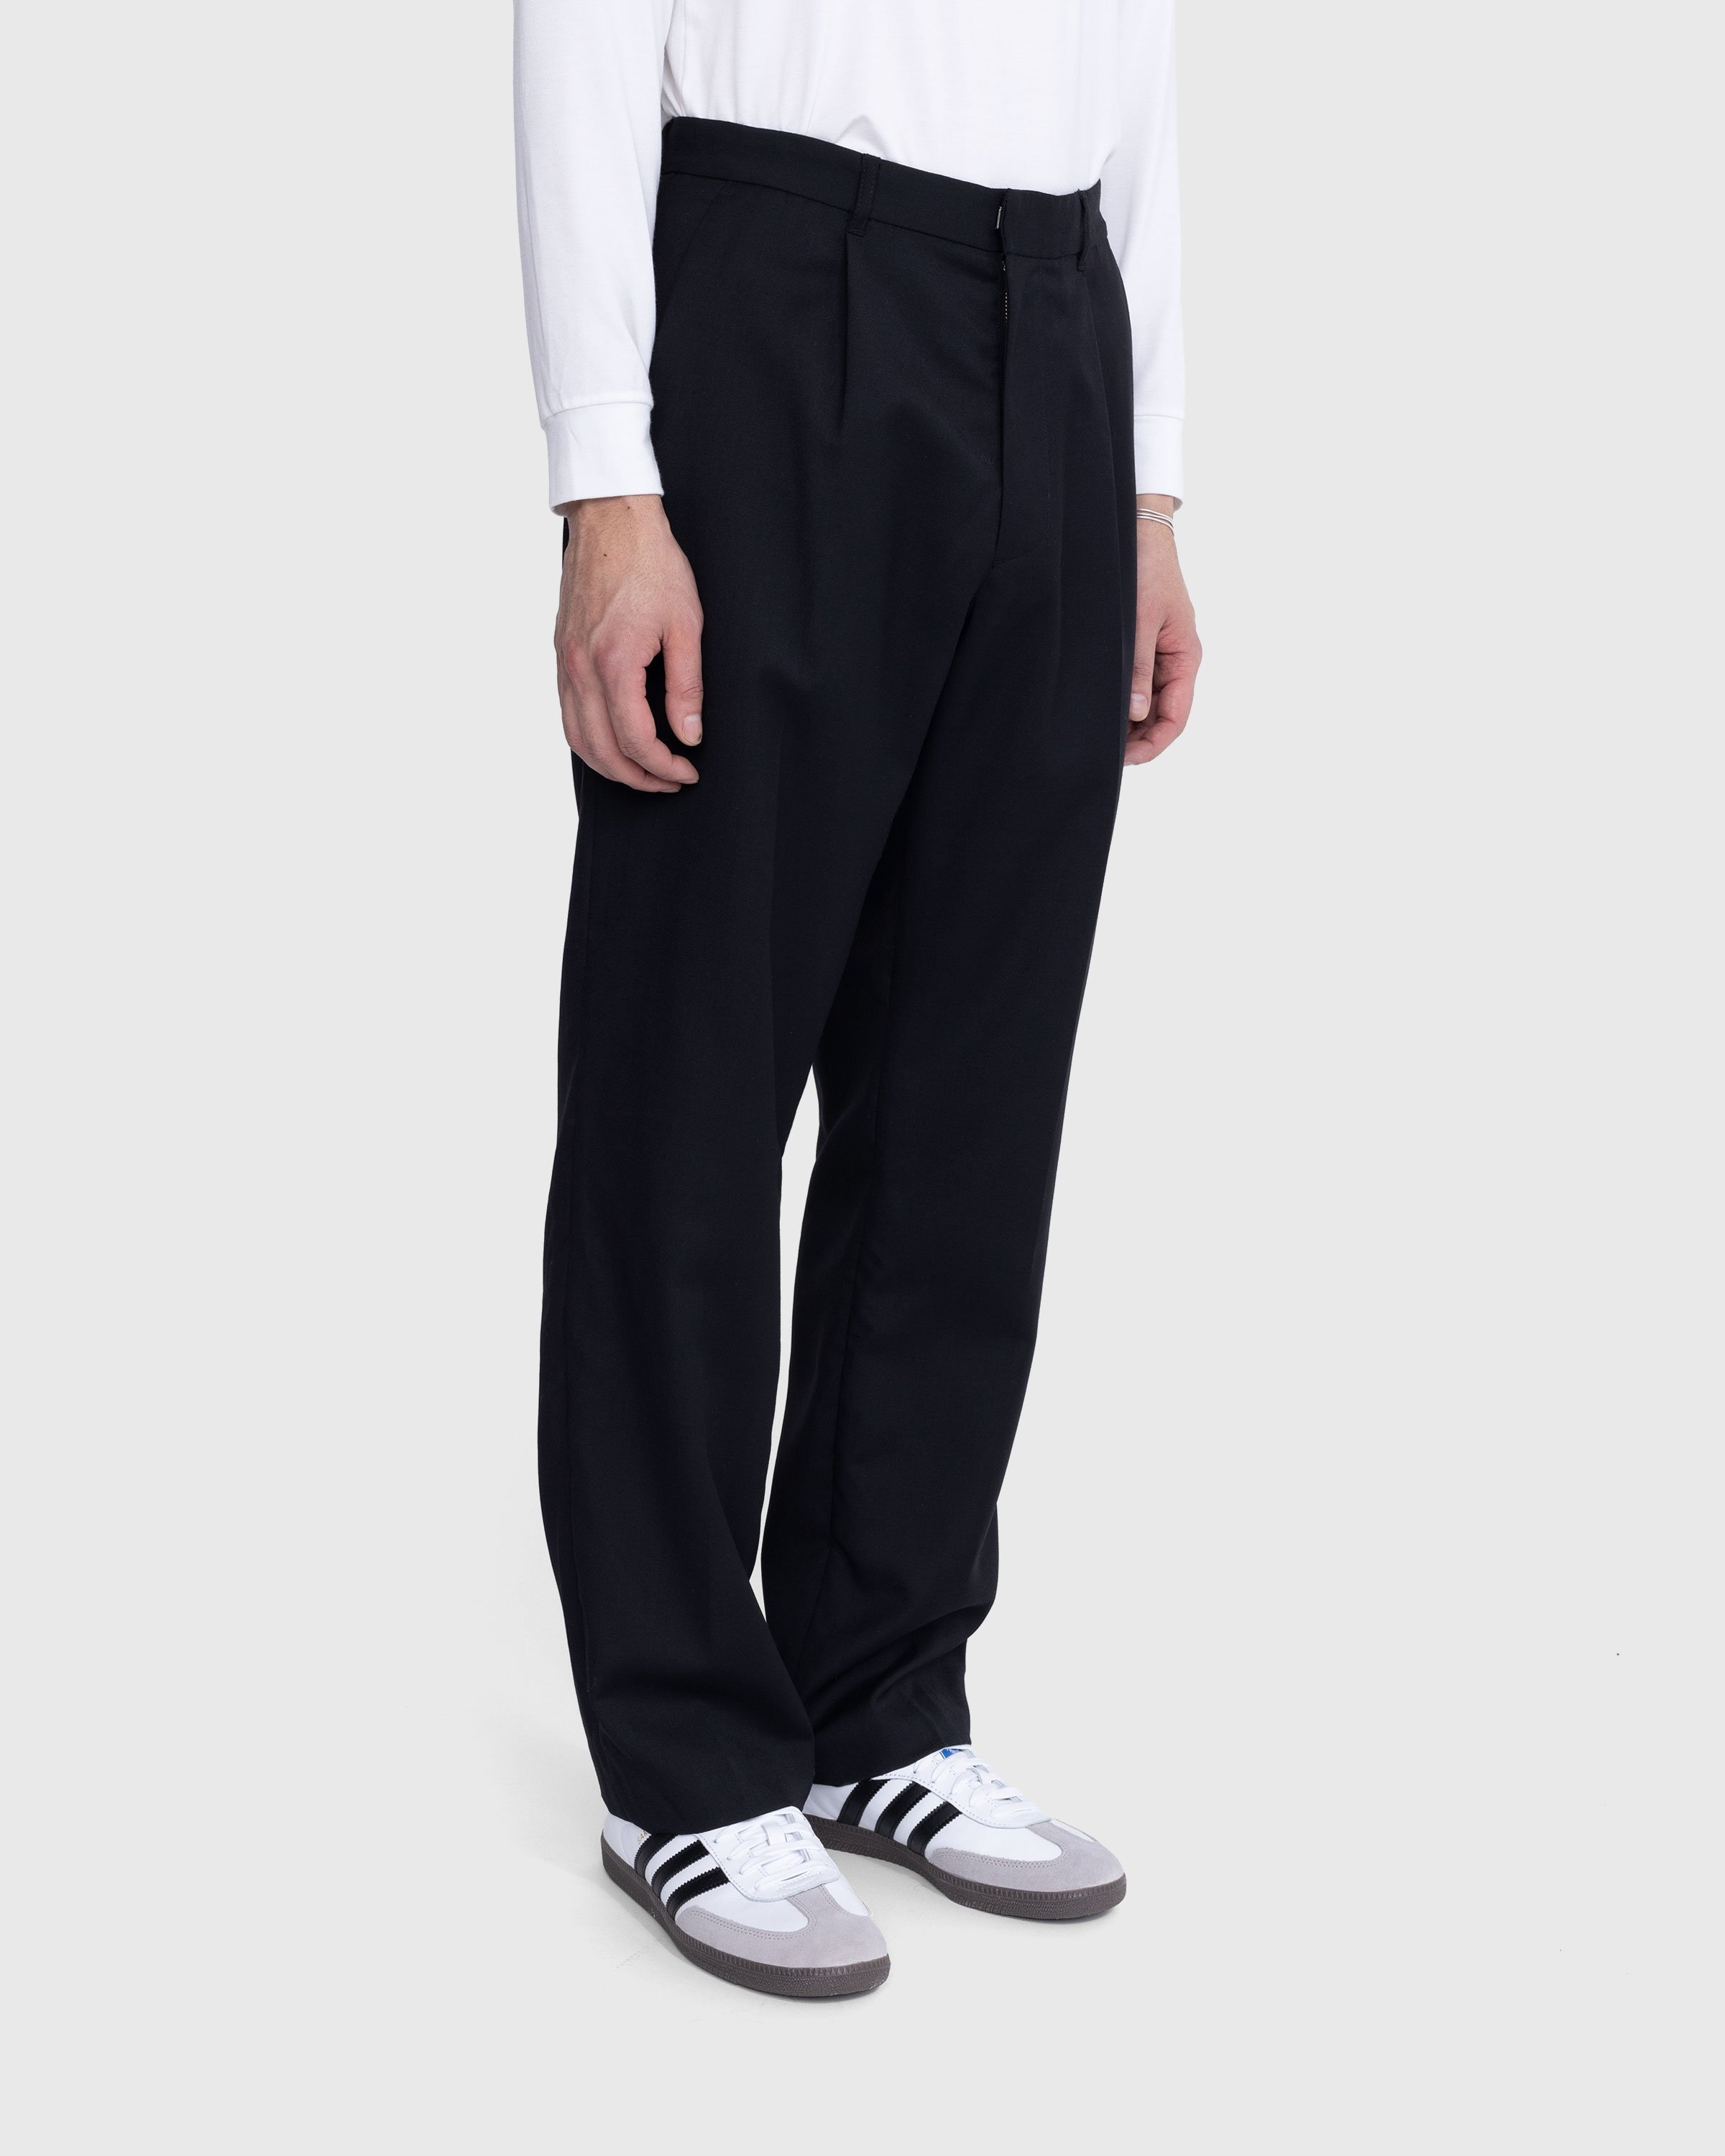 Highsnobiety - Tropical Wool Suiting Pants Black - Clothing - Black - Image 4